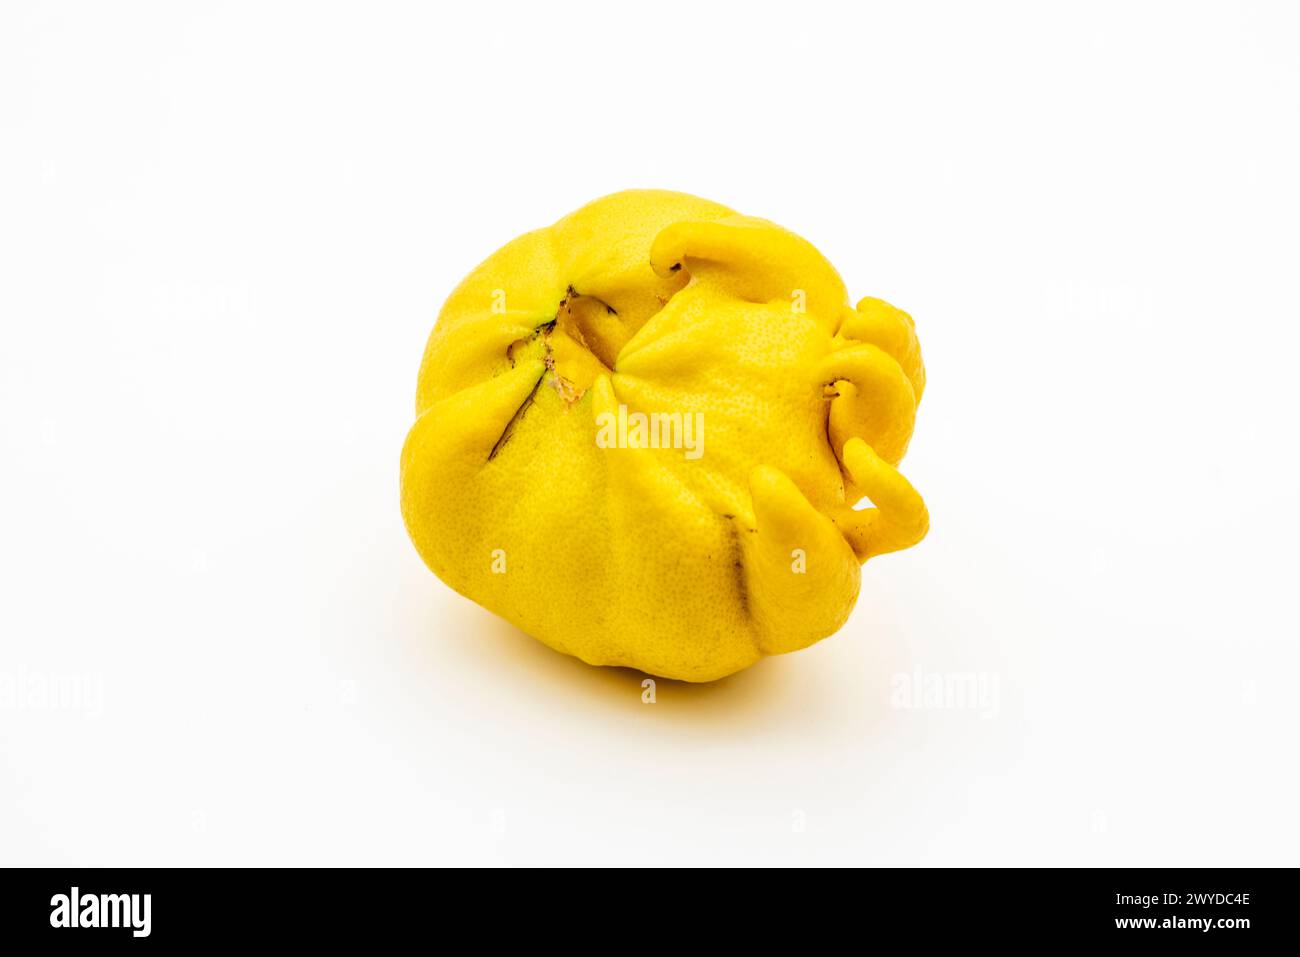 Limón deforme atacado por eryophis seldoni, o ácaro de las maravillas, aislado en blanco Stock Photo